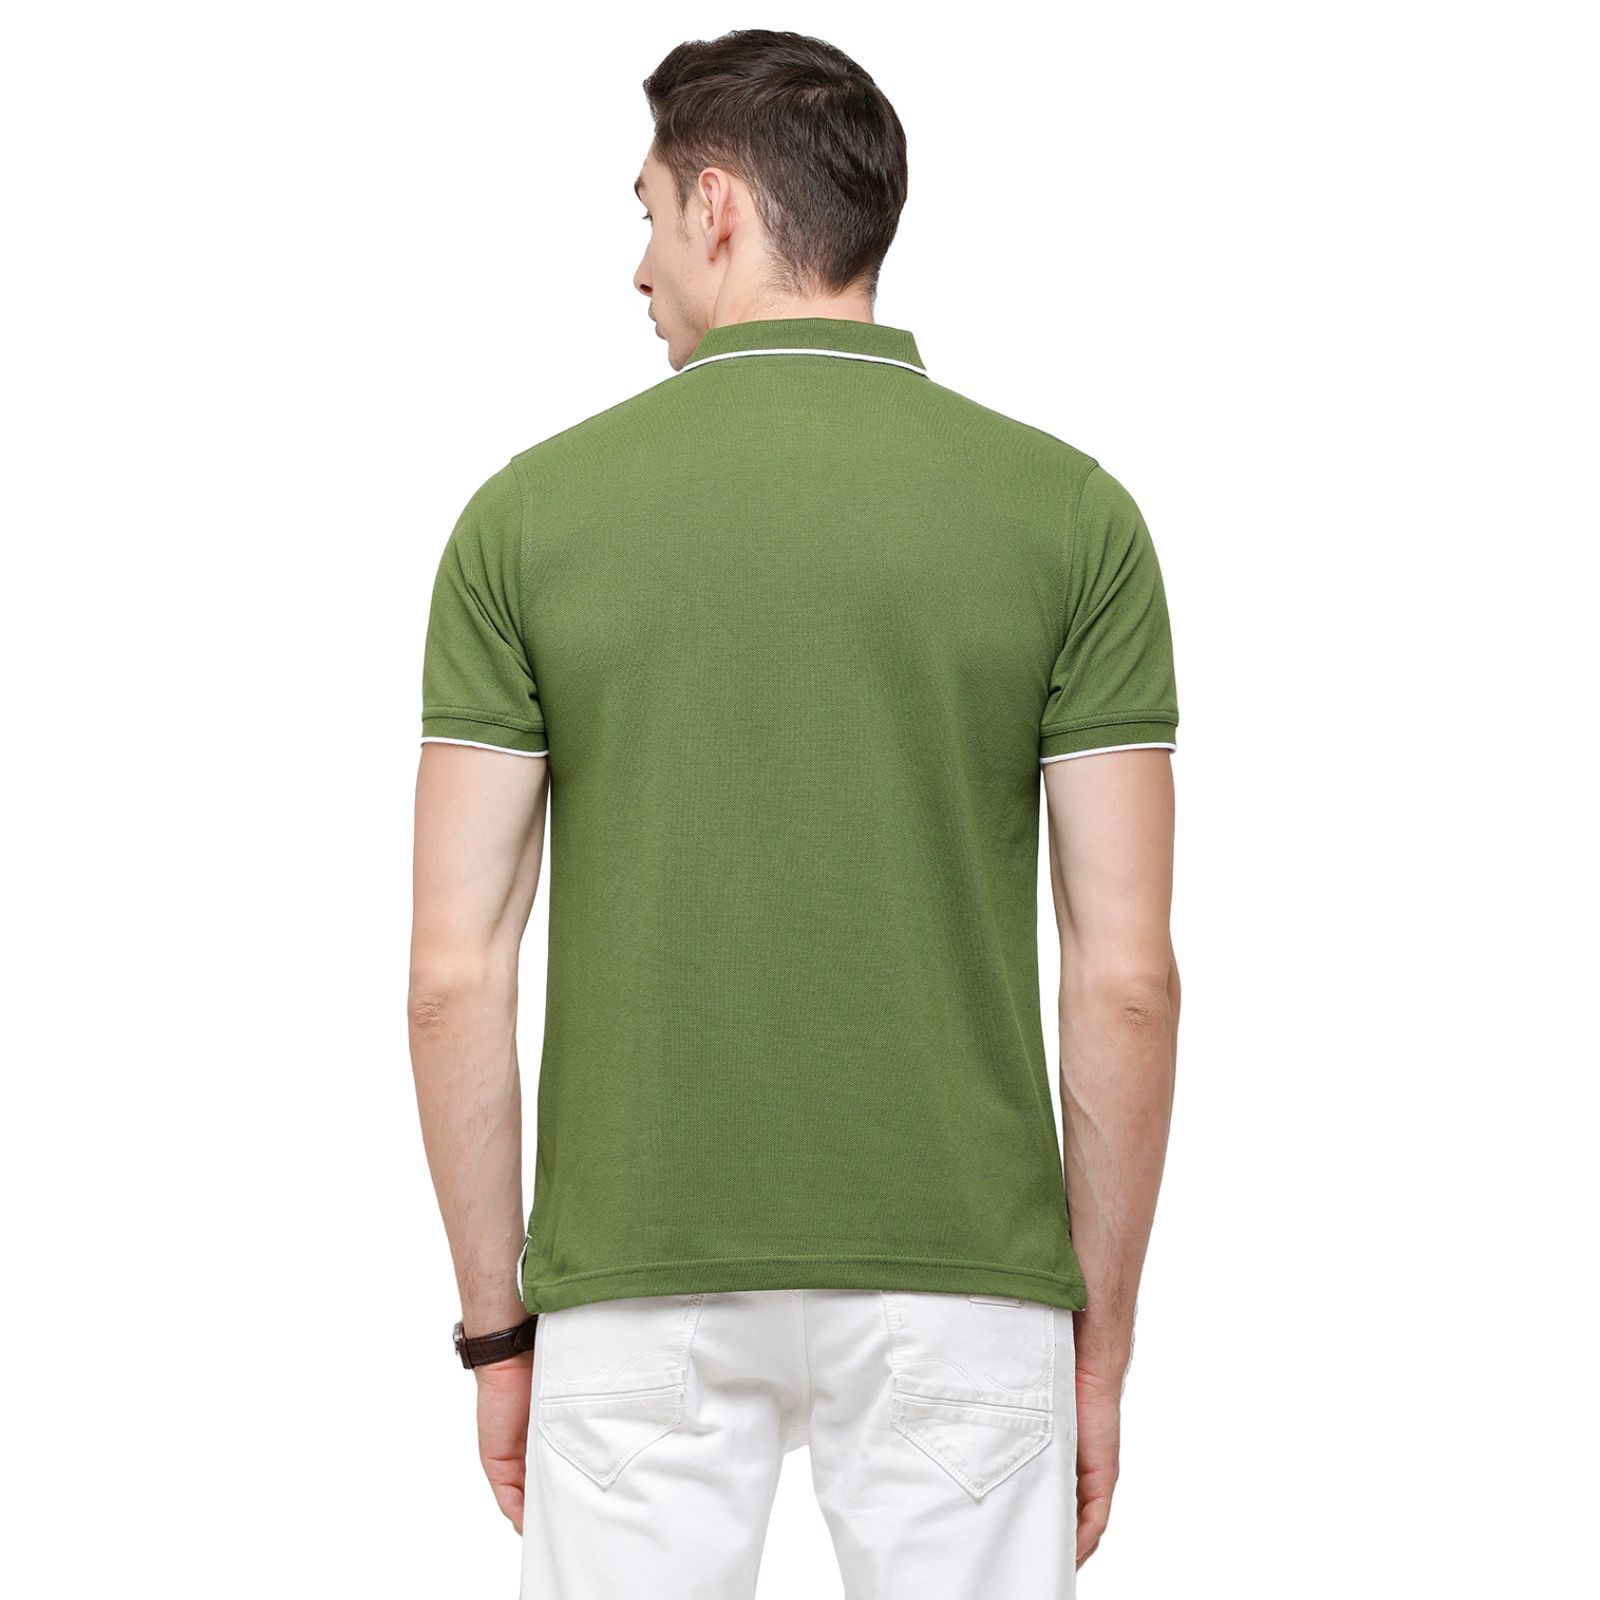 Classic polo Men's Olive Smart Double Pique Polo Half Sleeve Authentic Fit T-Shirt Nova - Olive T-Shirt Classic Polo 